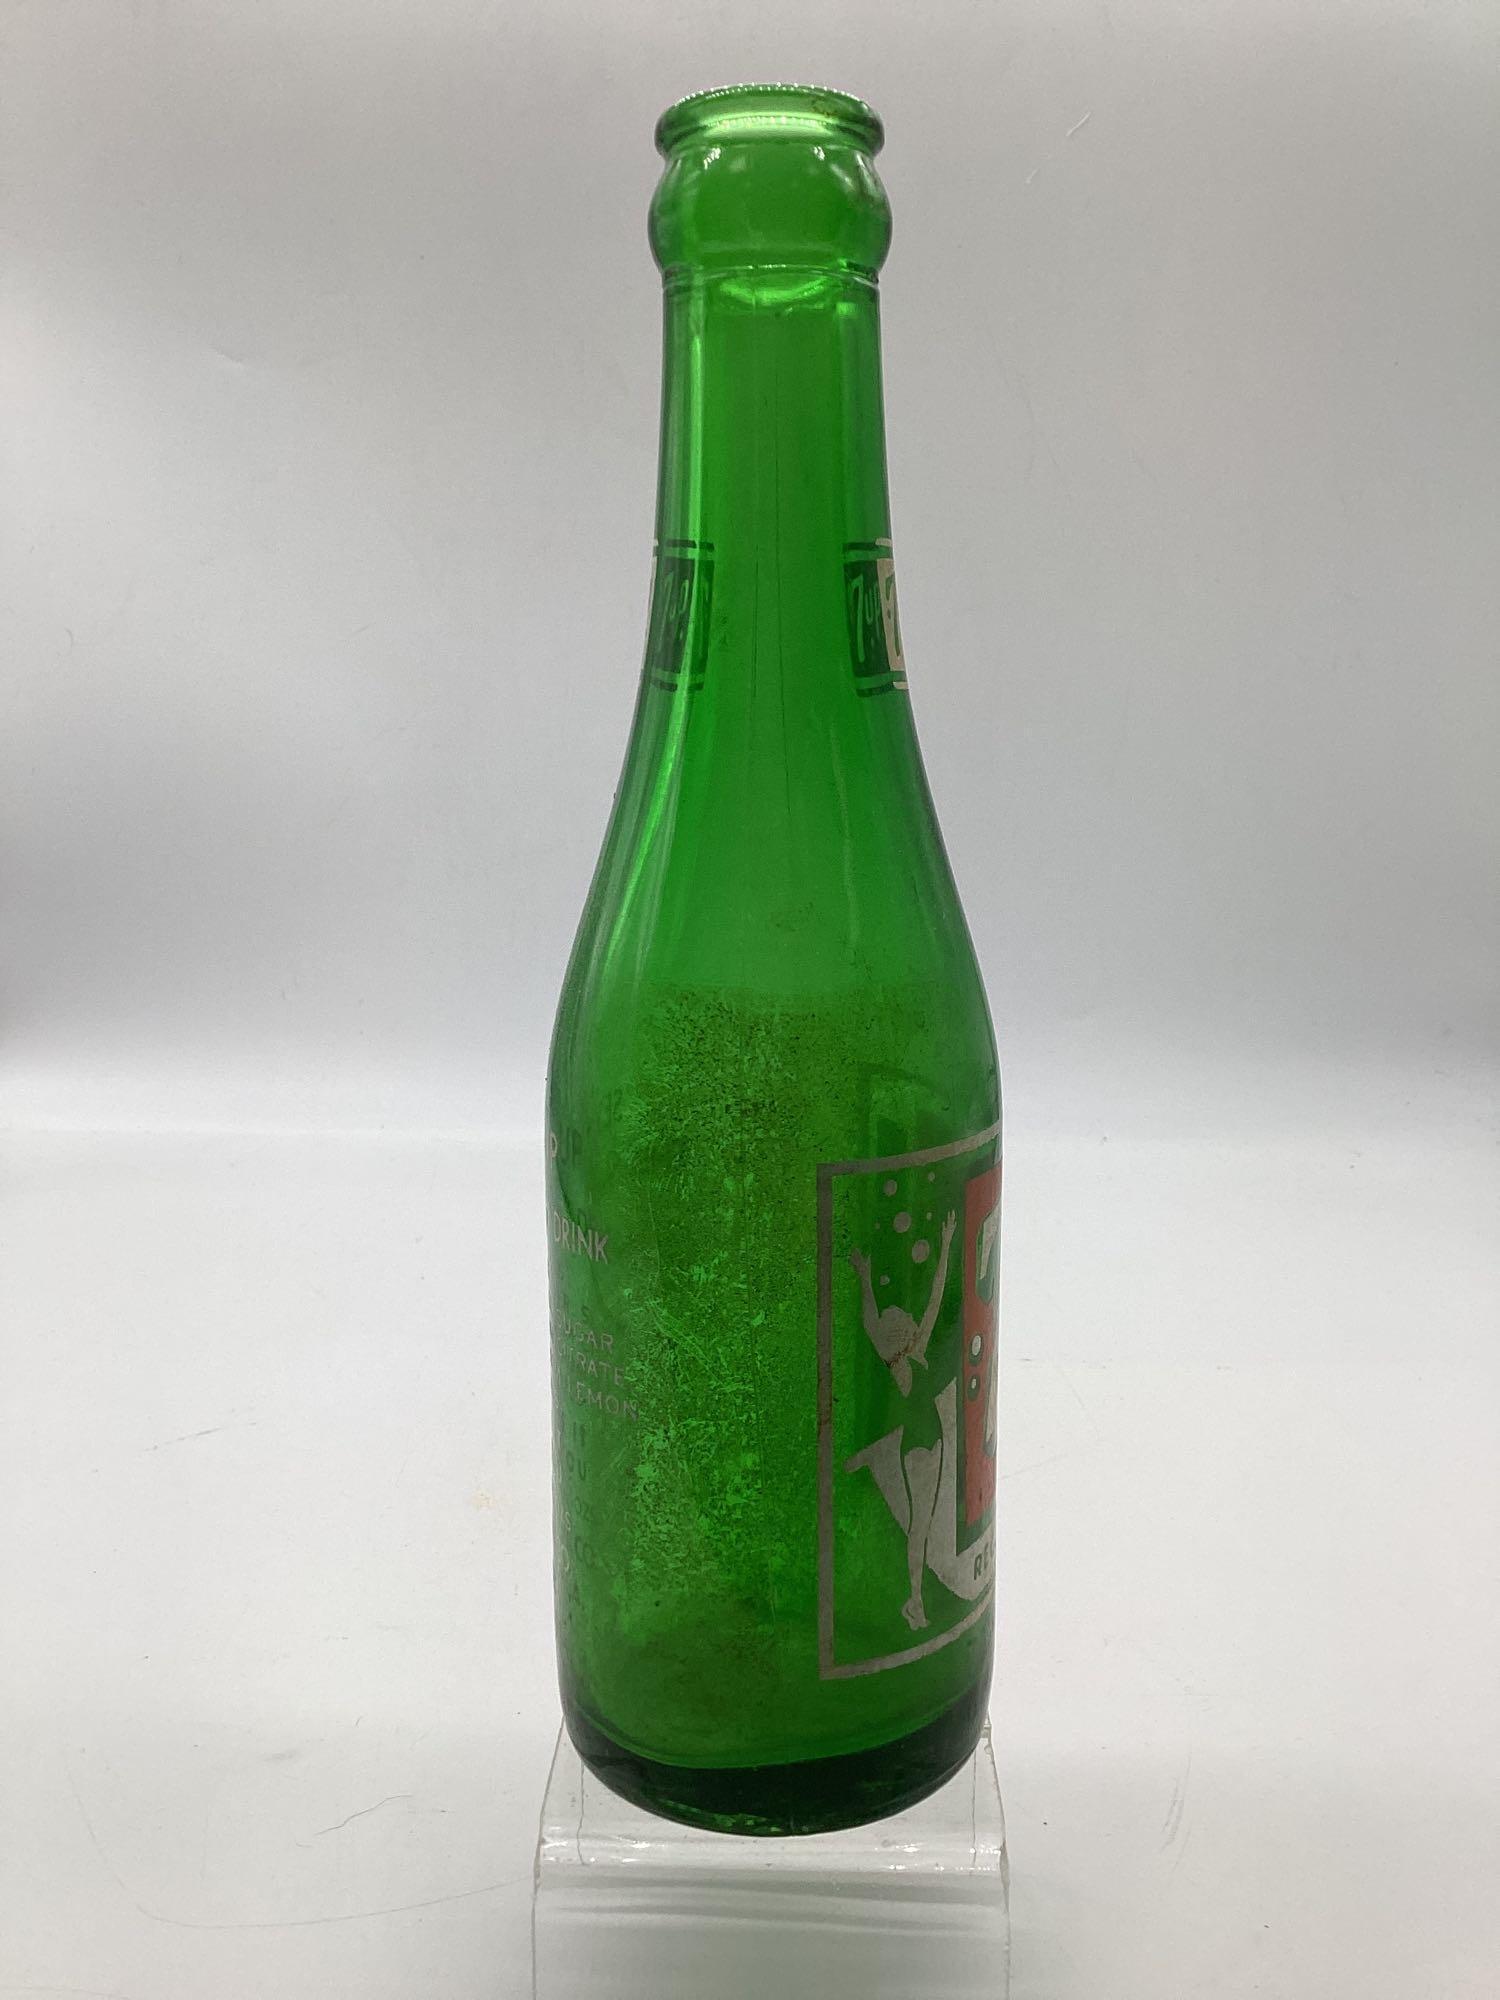 7-Up Green Soda Bottle Tulsa, OK